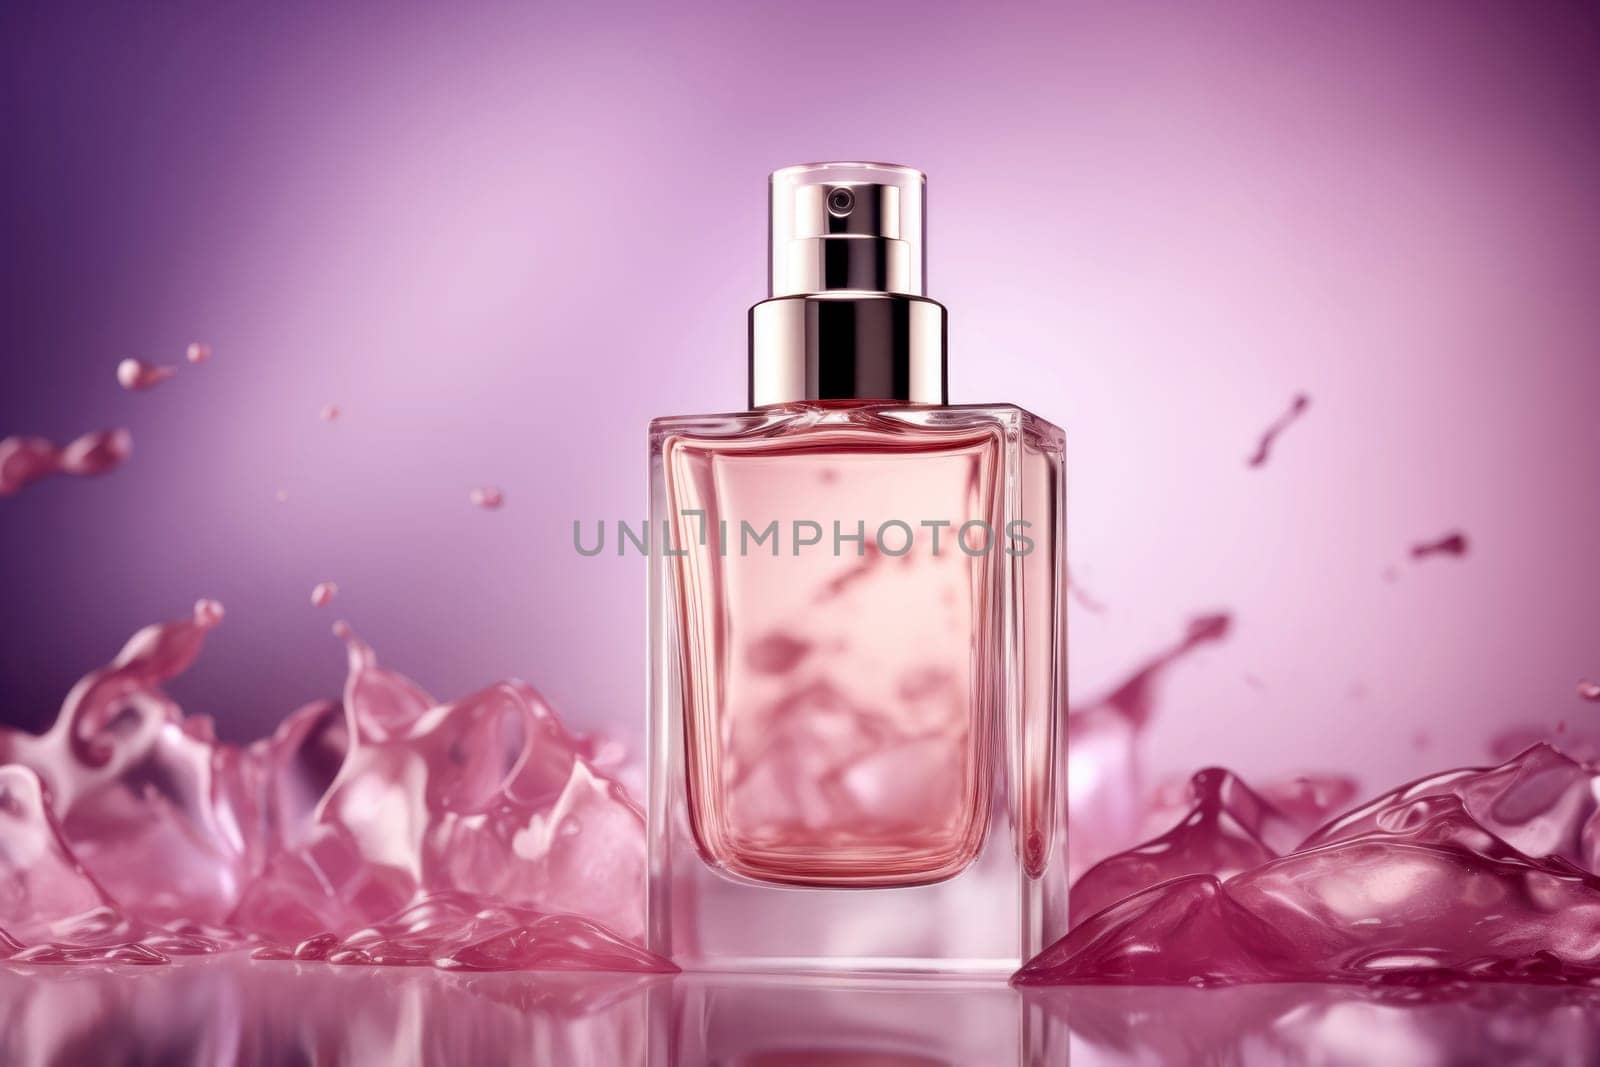 Luxury perfume bottle with dynamic liquid splash on a purple backdrop